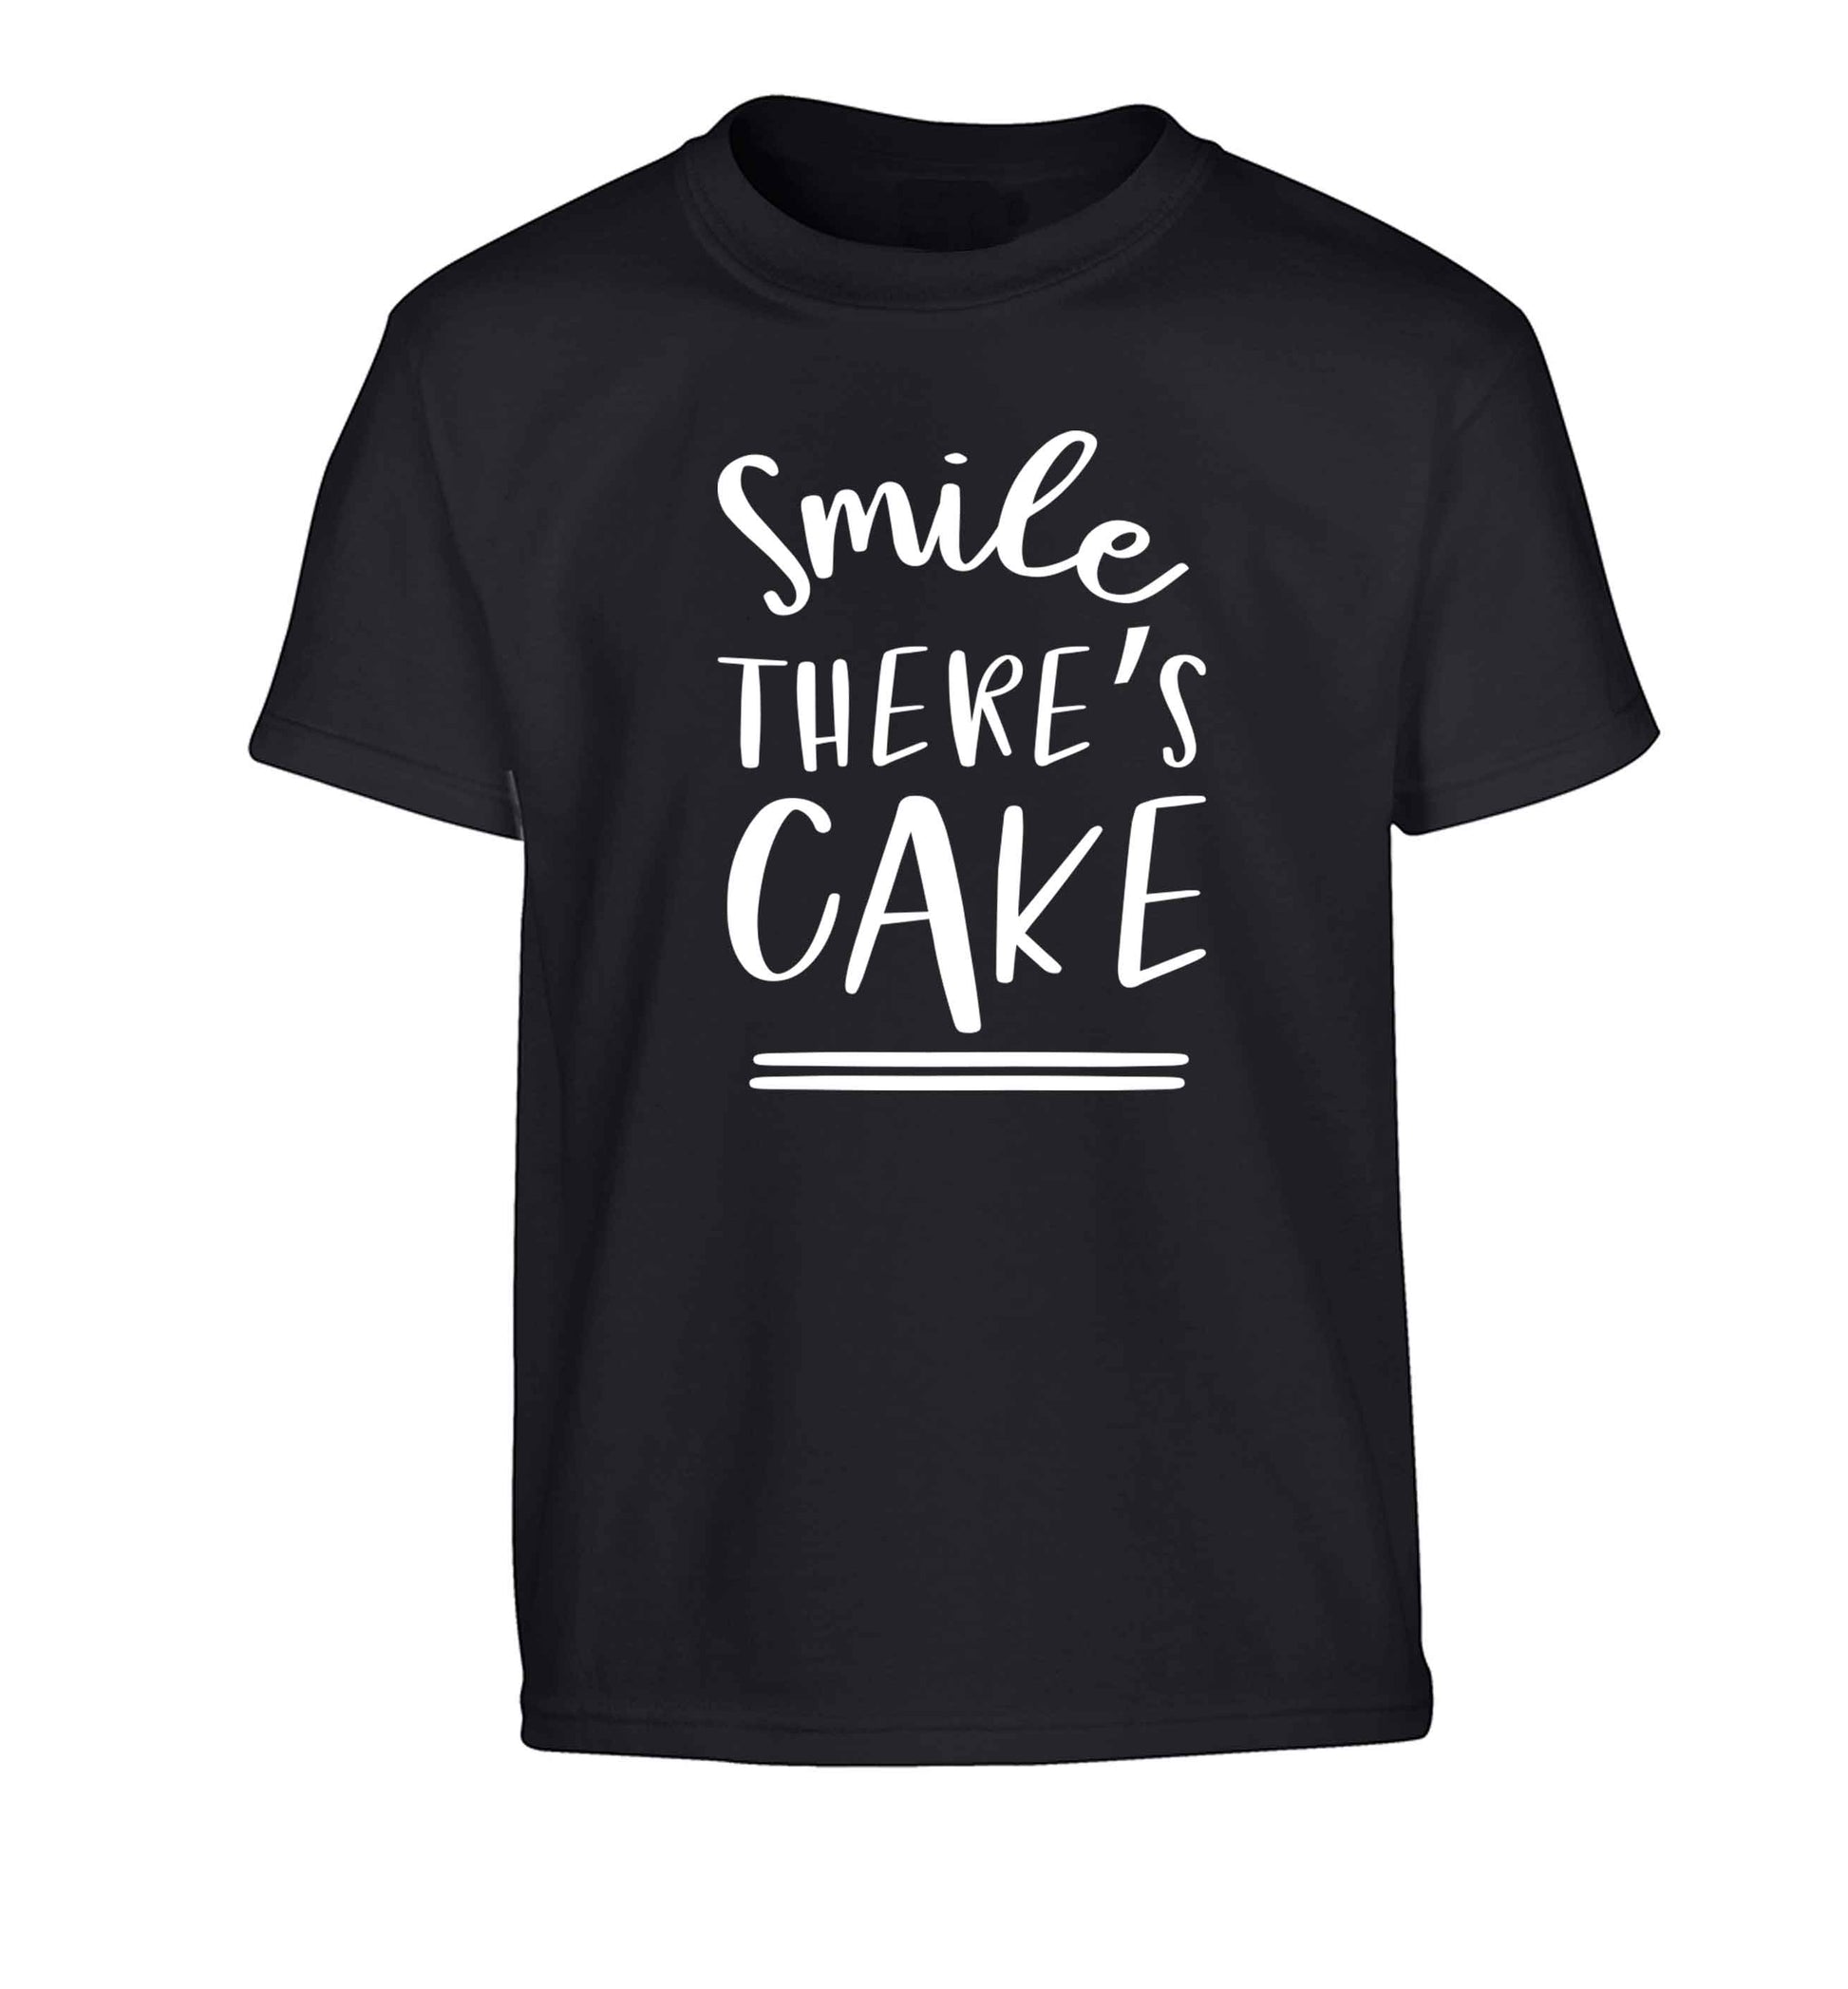 Smile there's cake Children's black Tshirt 12-13 Years